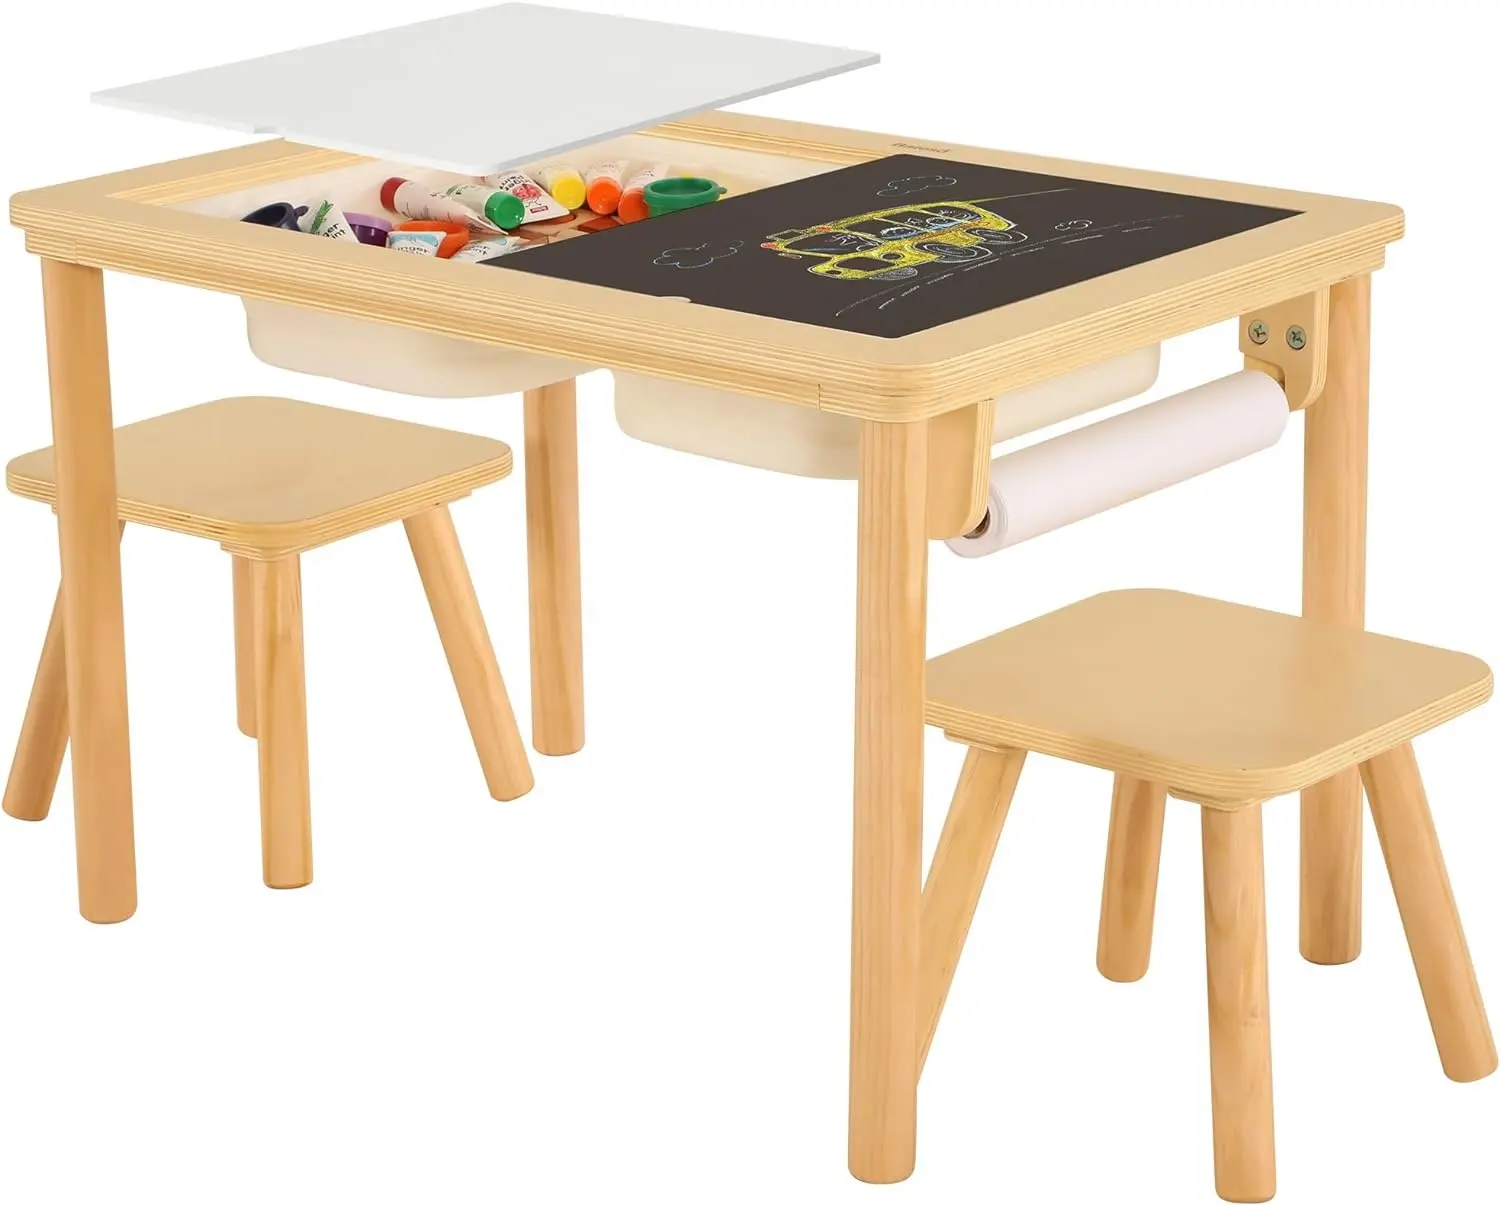 Wholesale Kids Sensory Table , Kids Sensory Table and Chairs, Sensory table for kids set of 3